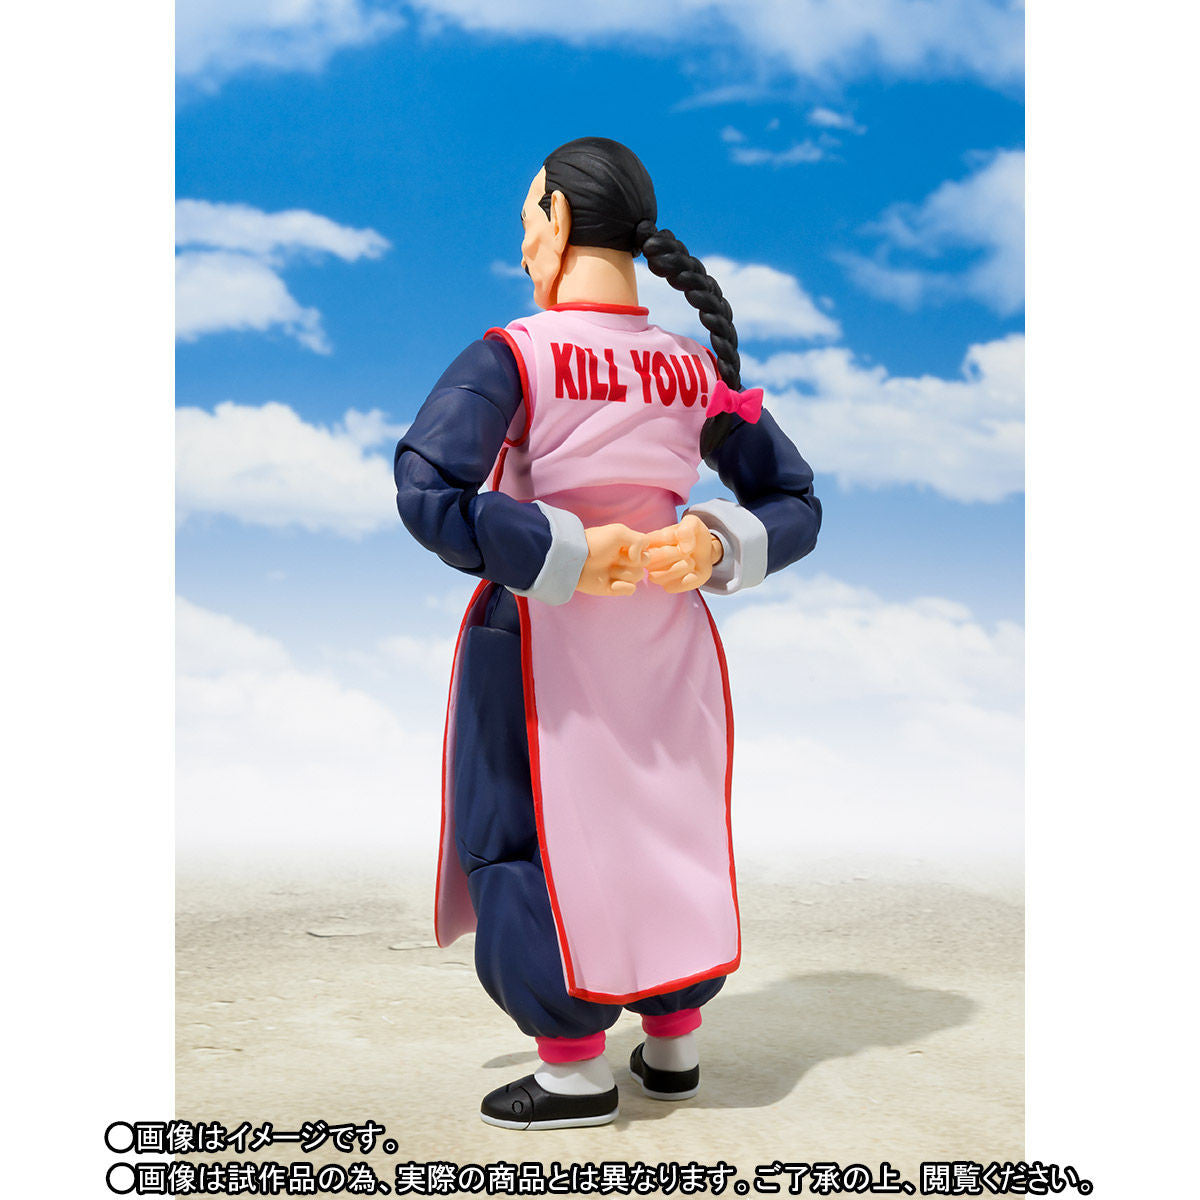 S.H. Figuarts Dragon Ball Tao Pai Pai Action Figure Japan Ver 3